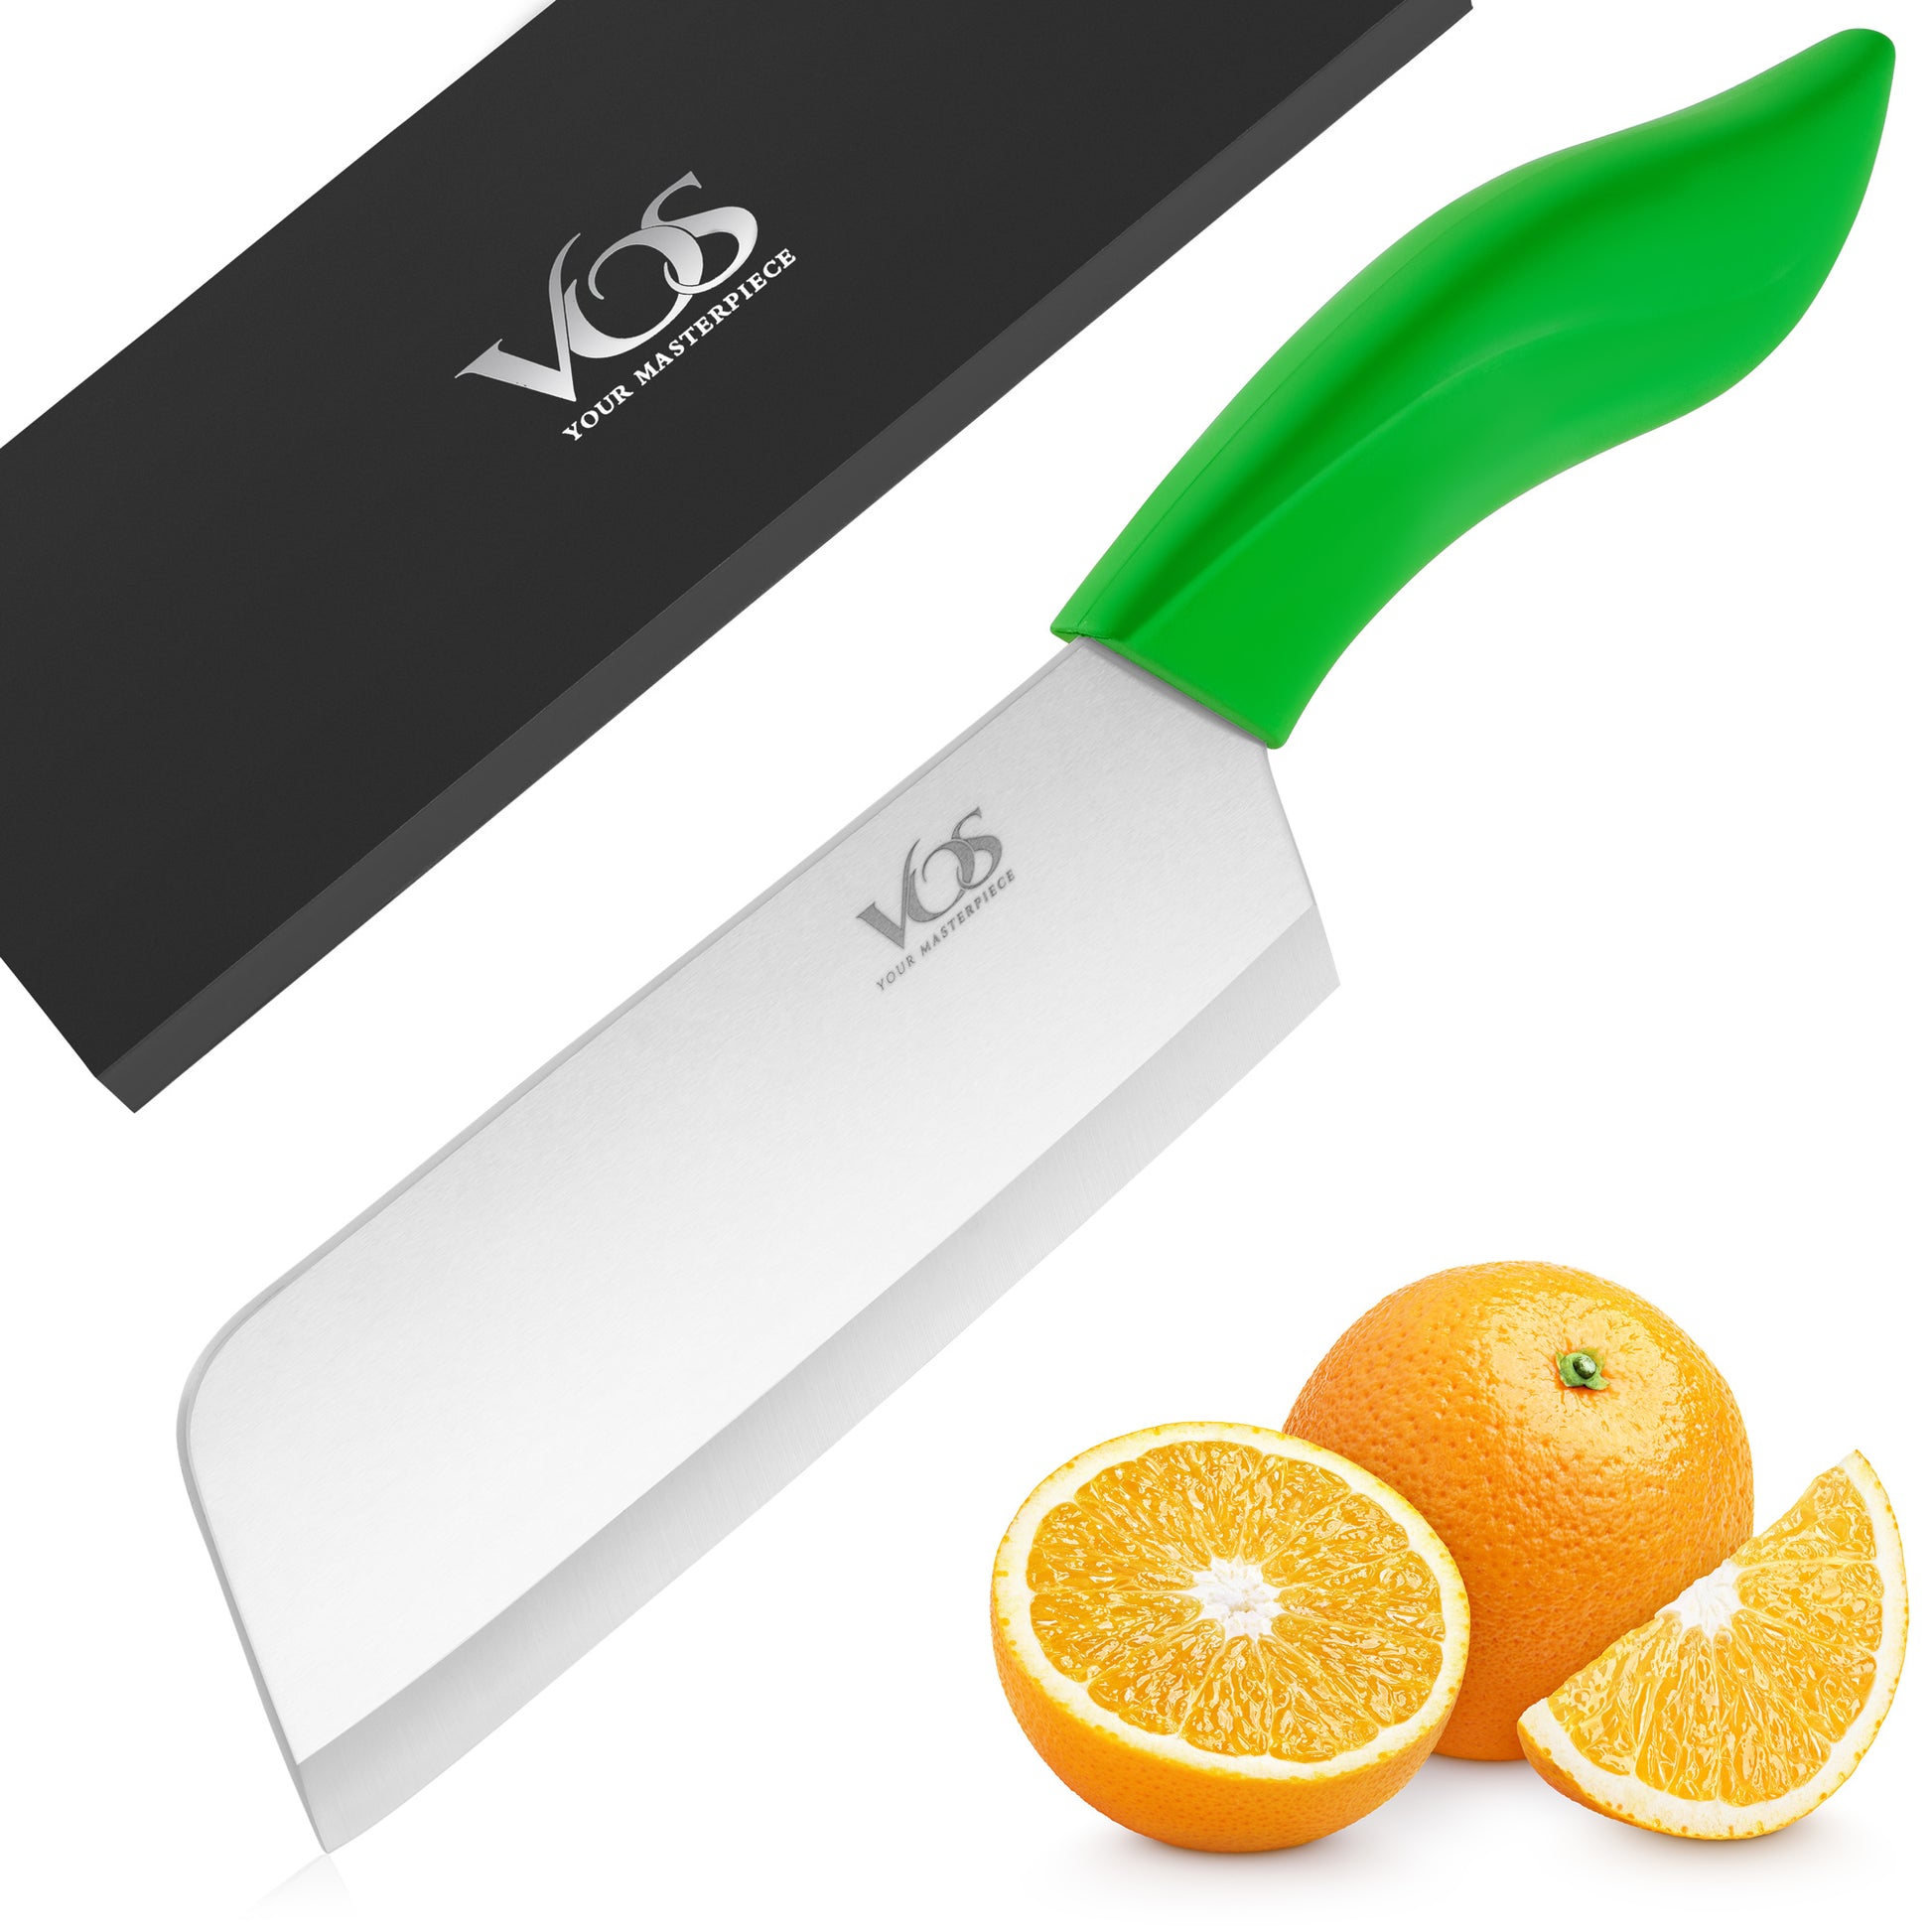 Ceramic 4 Pcs Knife Set with Knives Holder - Black – Vosknife